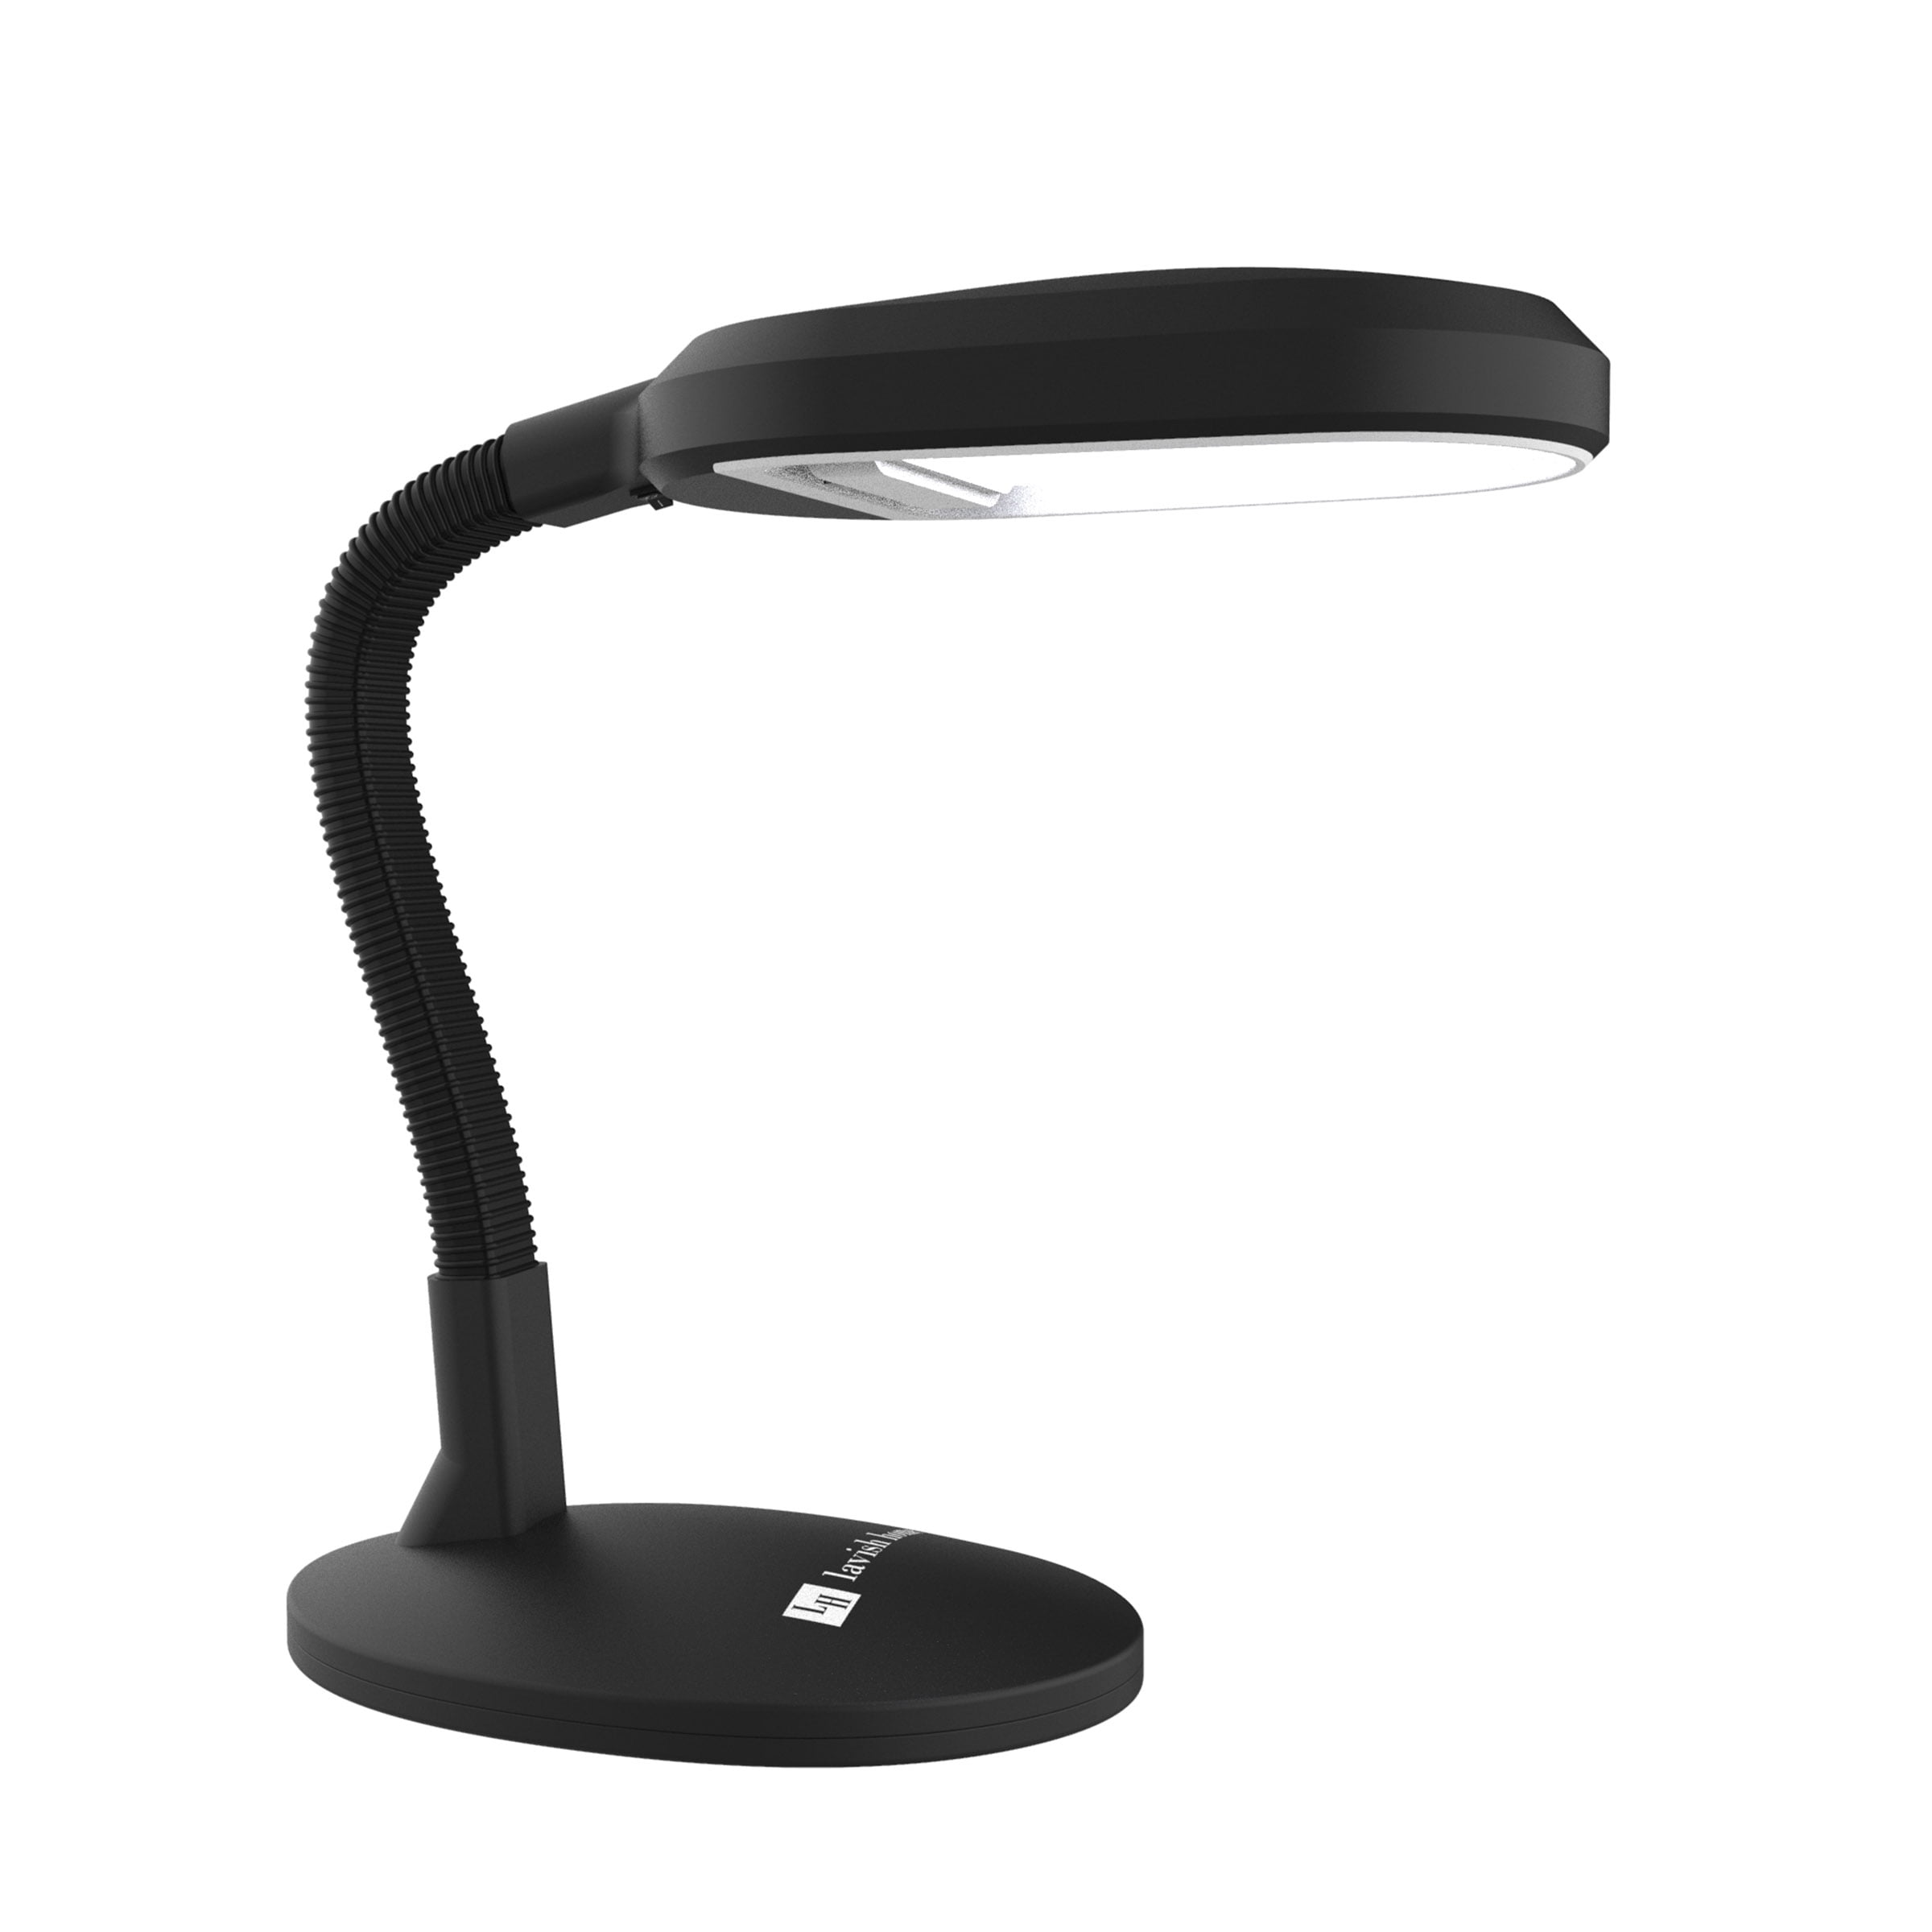 Deluxe Sunlight Desk Lamp Black (Includes CFL Light Bulb) - Lavish Home